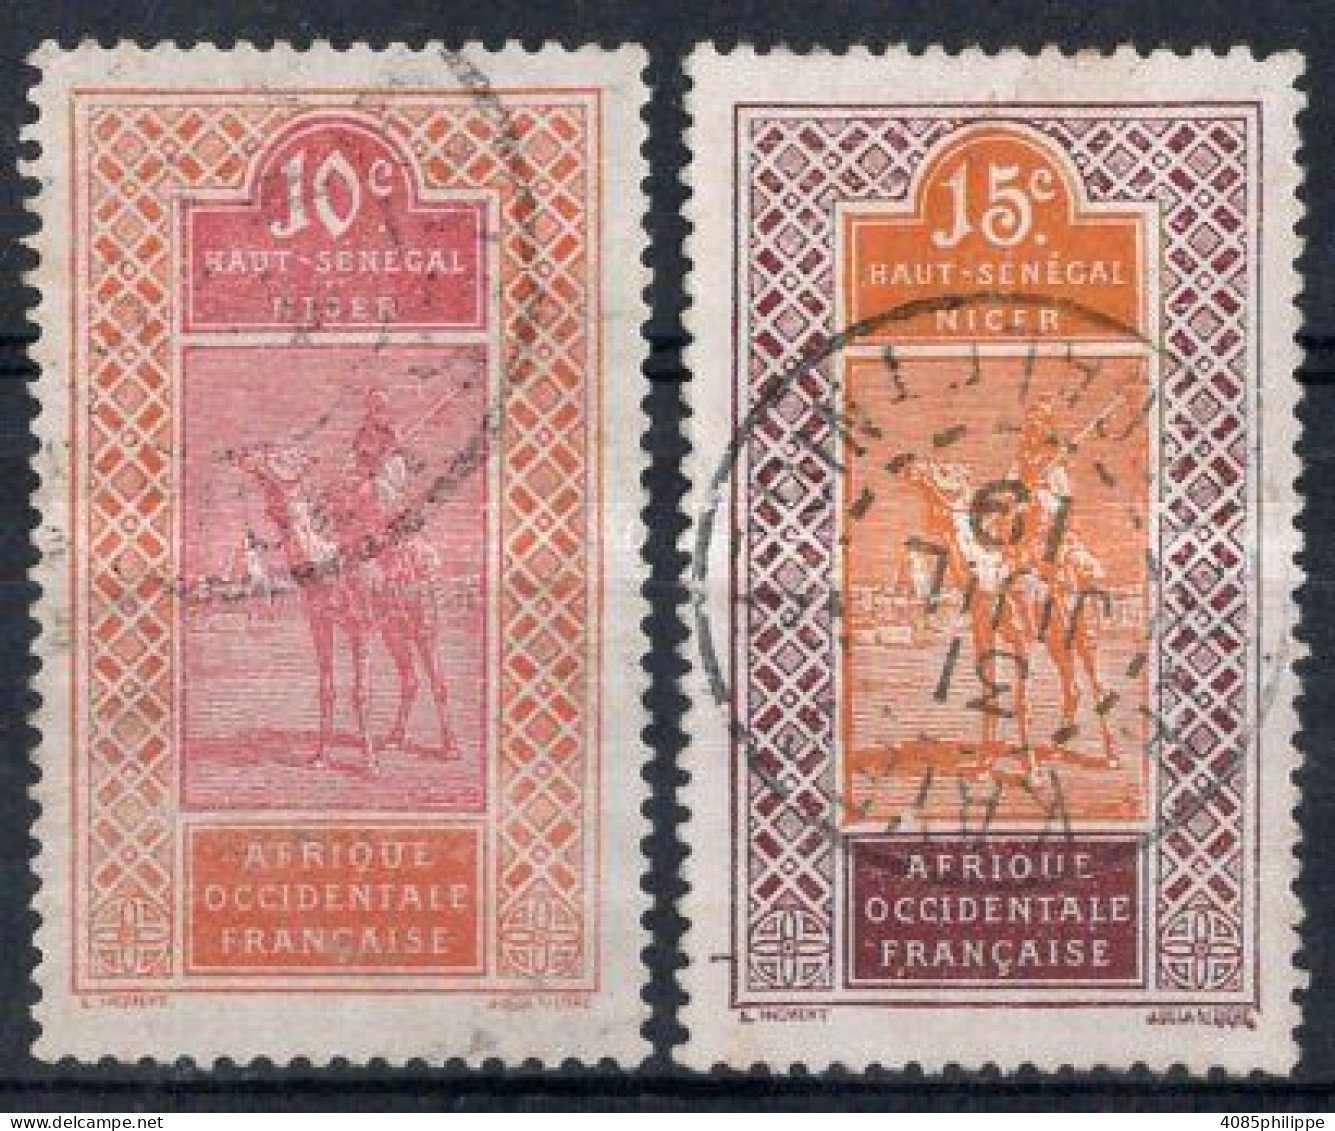 HAUT SENEGAL NIGER Timbres-poste N°22 & 23 Oblitérés TB Cote : 4€50 - Used Stamps